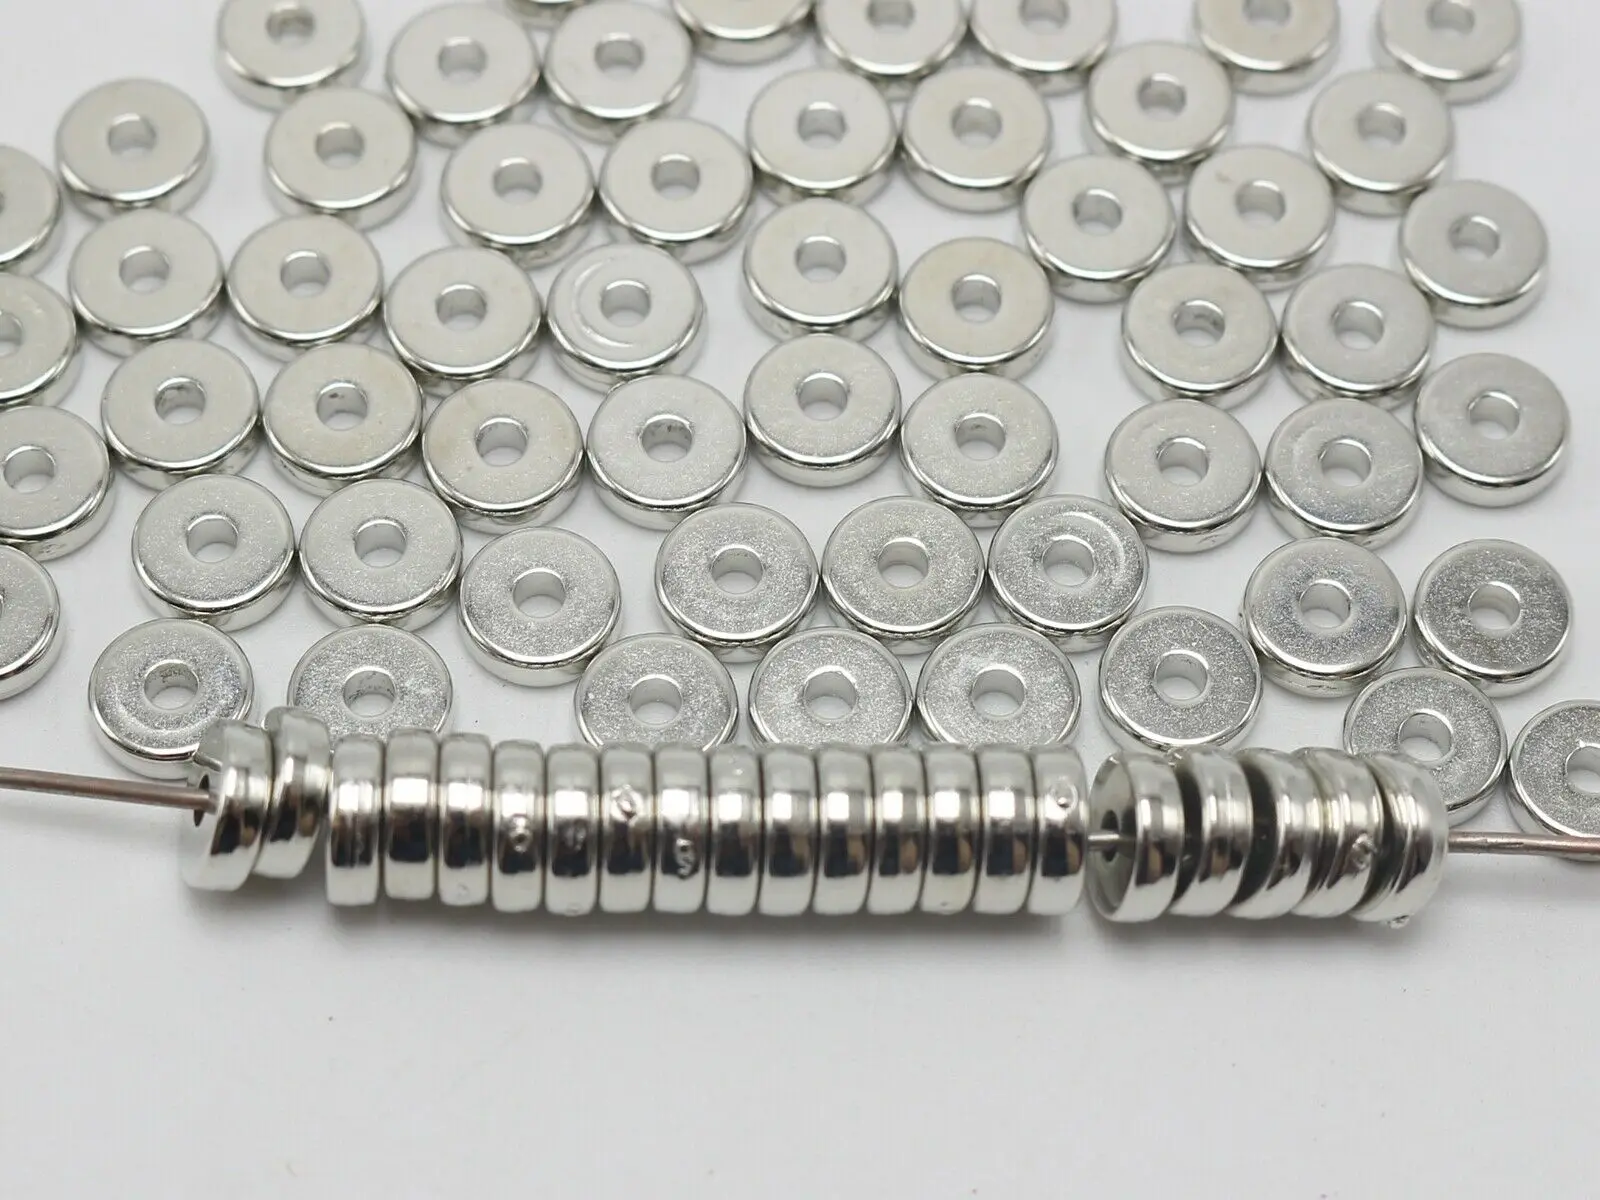 

200 Silver Colour Tone Metallic Acrylic Disc Heishi Beads 8mm Spacer Jewelry Making